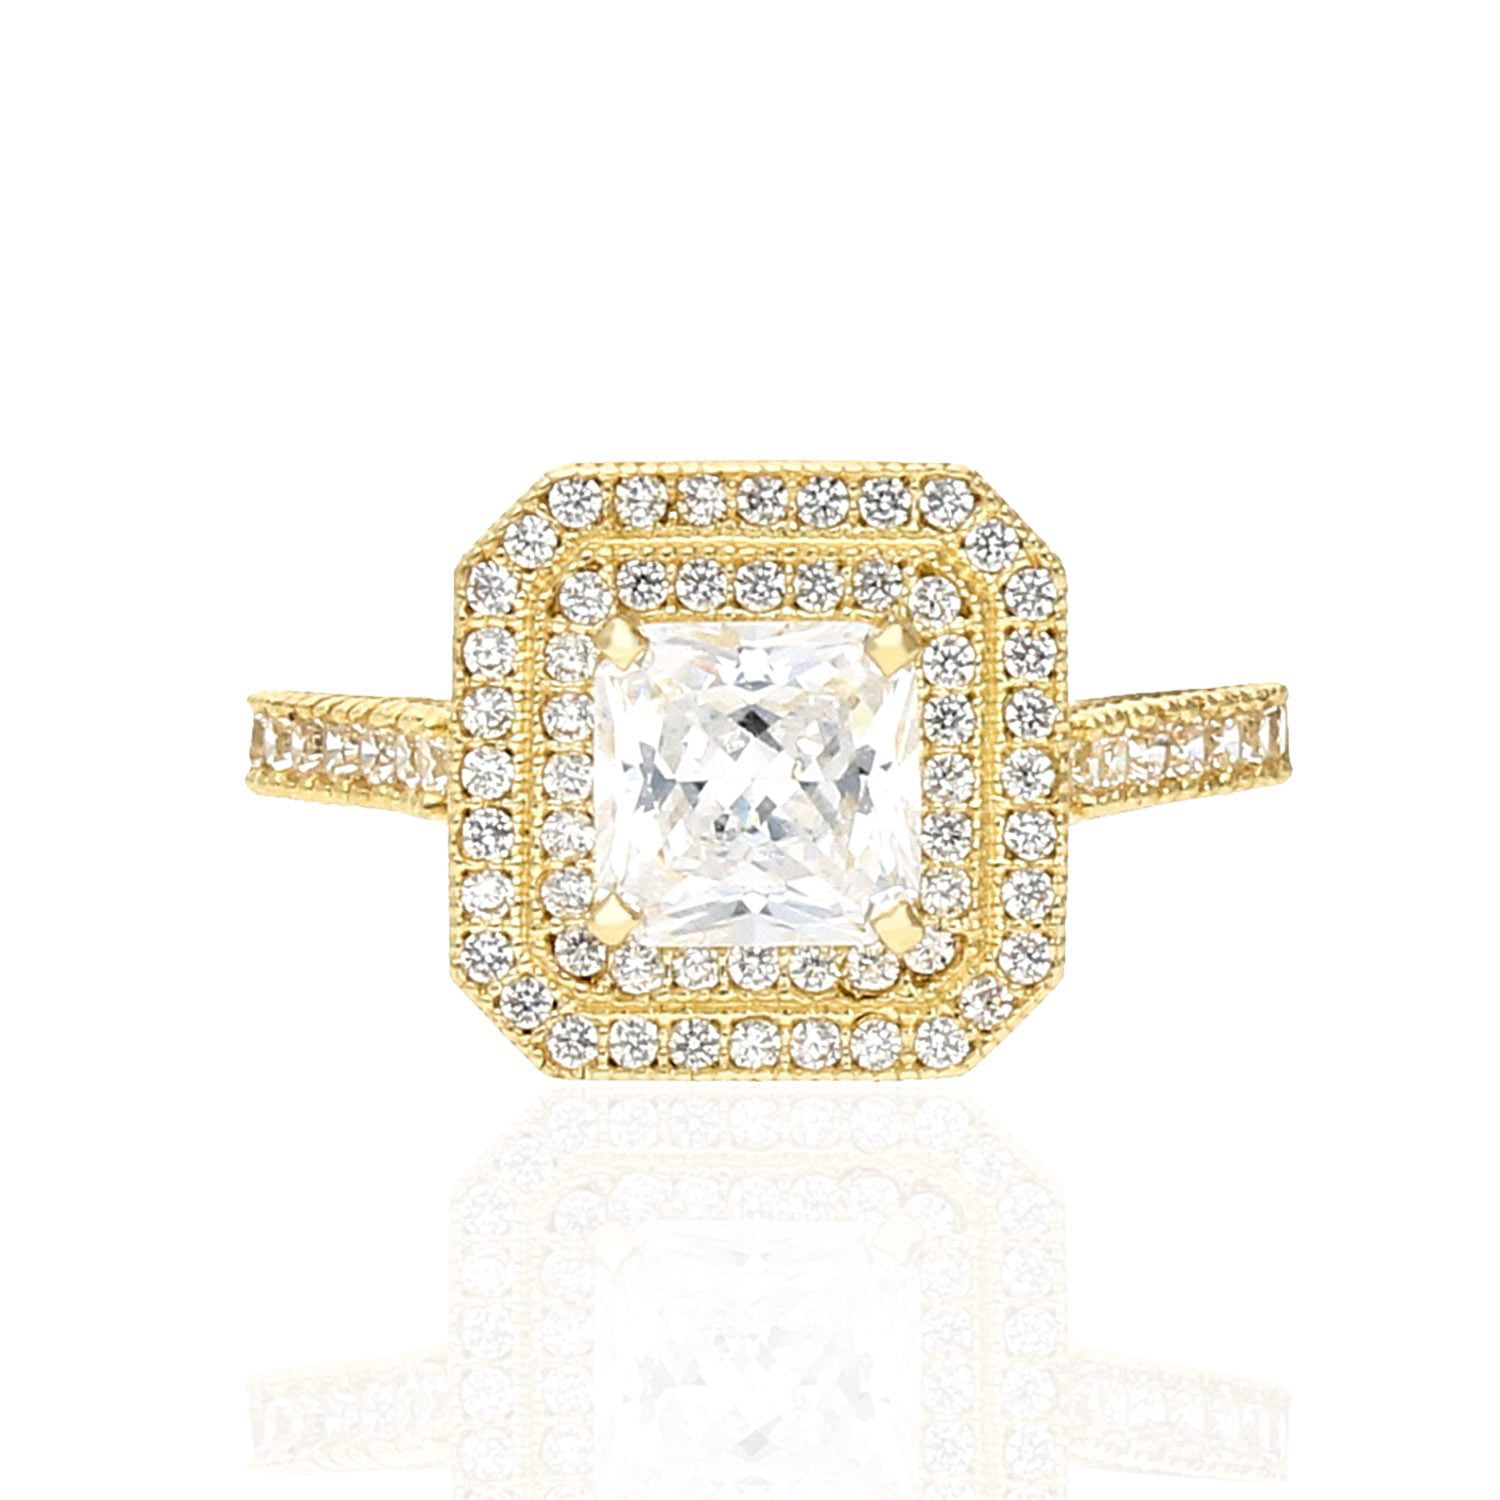 Details about   2.50Ct Asscher Cut Emerald Diamond Antique Engagement Ring 925 Sterling Silver 